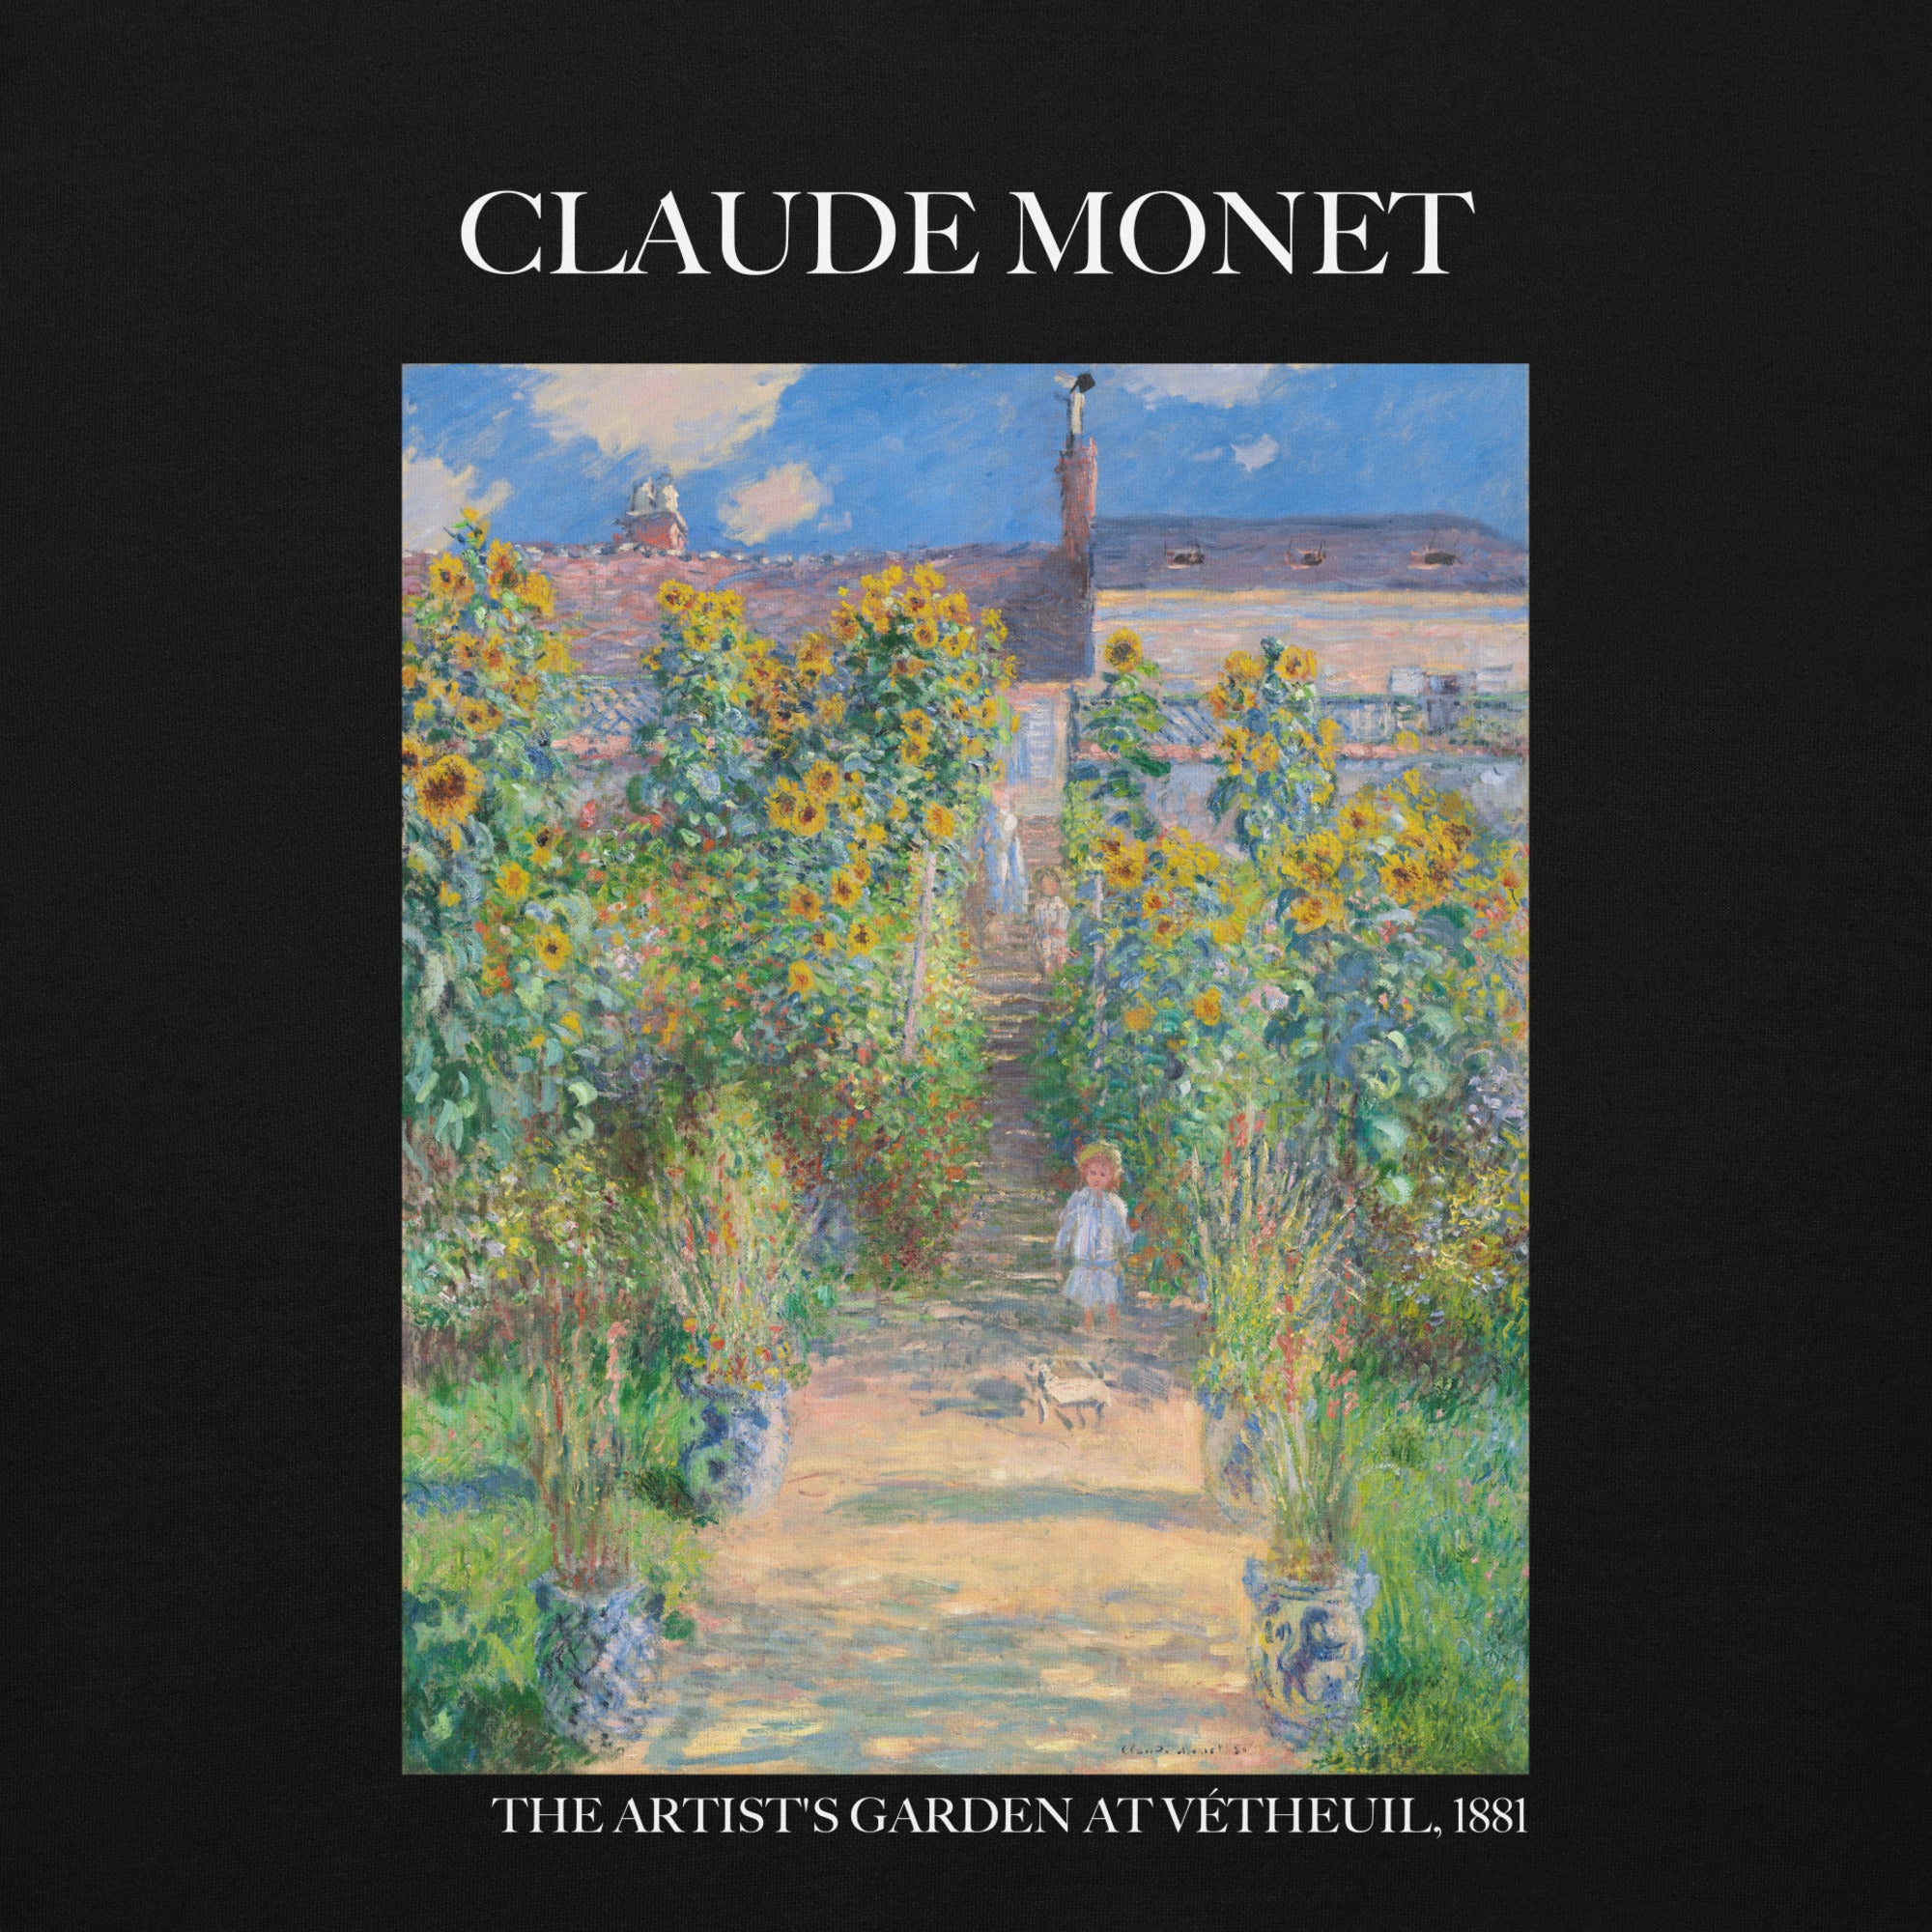 Claude Monet 'The Artist's Garden at Vétheuil' Famous Painting Hoodie | Unisex Premium Art Hoodie